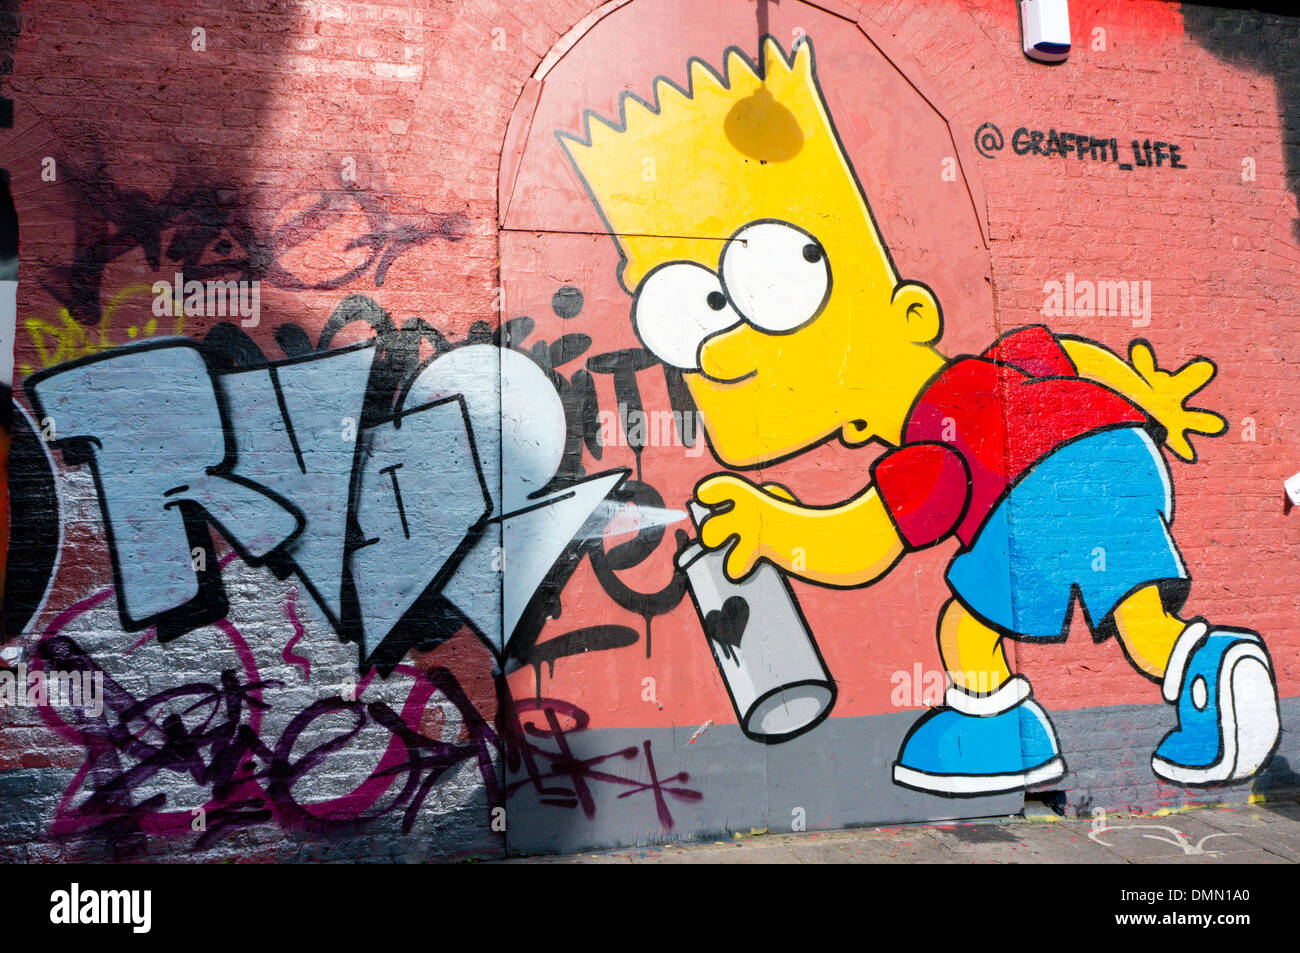 Un graffiti de Bart Simpson por Graffiti Vida en Whitechapel, Londres. Foto de stock